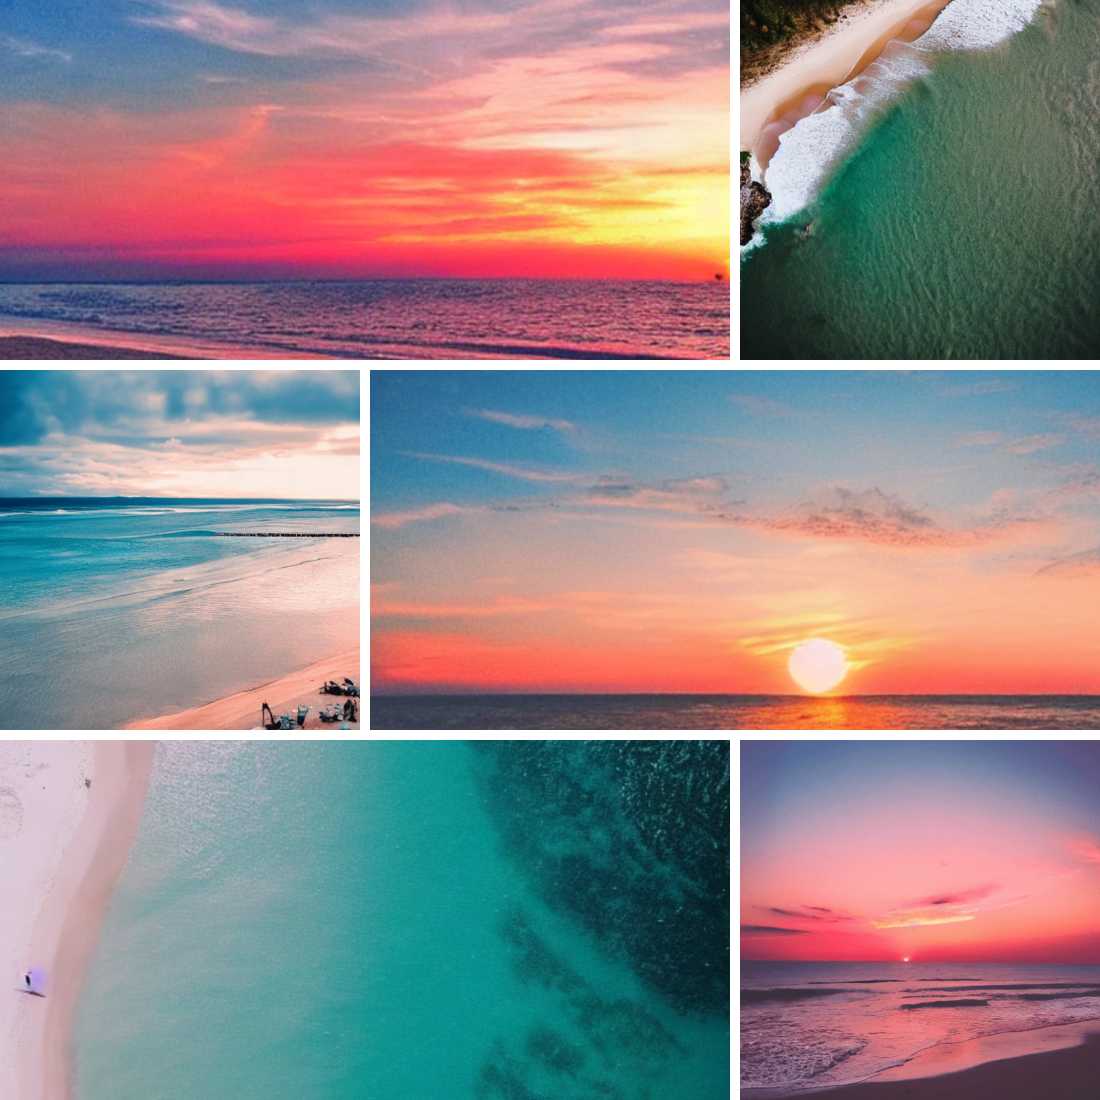 Beautiful Sunset Beaches Photo cover image.